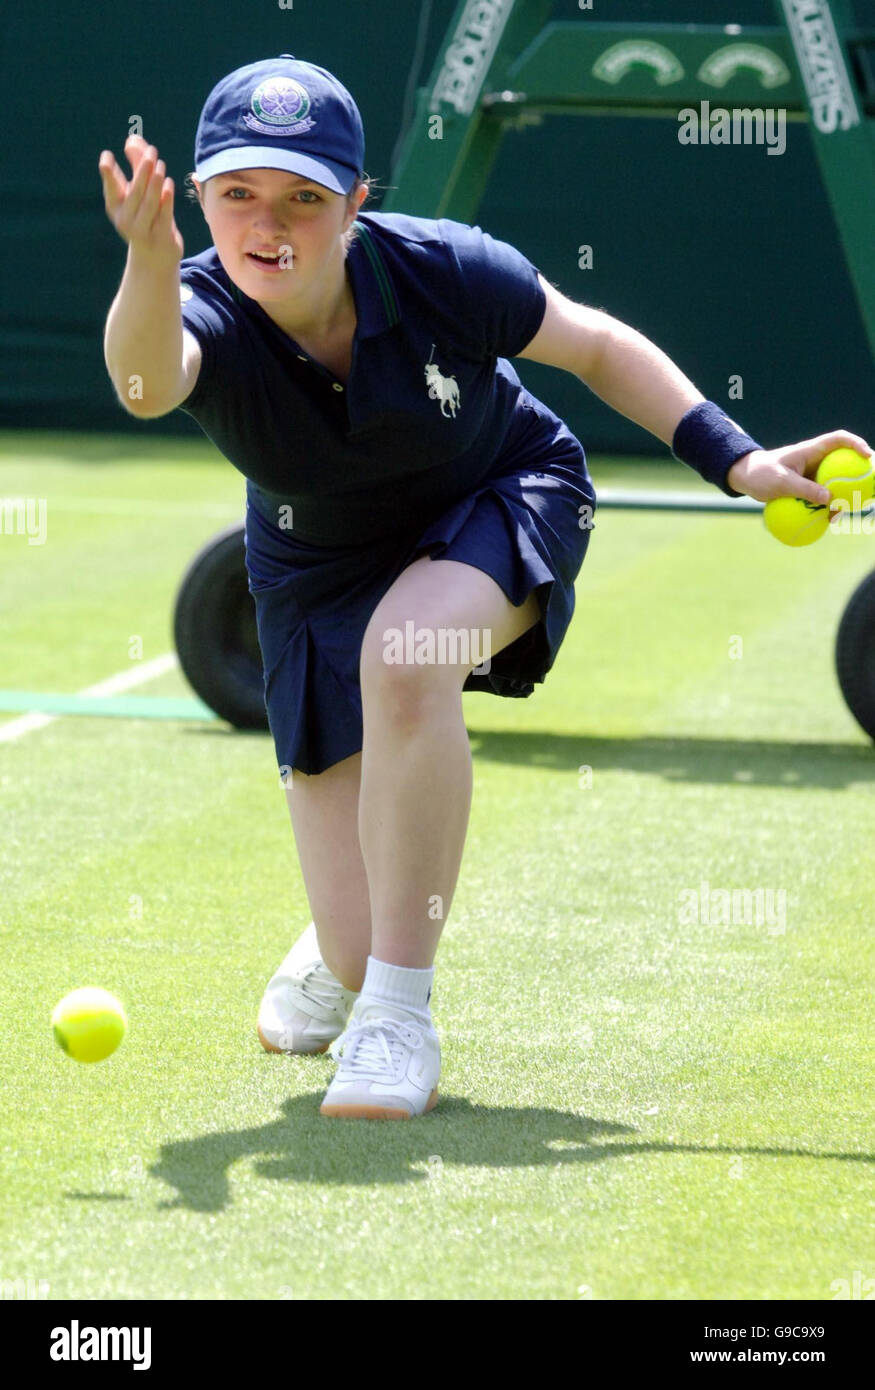 Tennis - Wimbledon - Polo Ralph Lauren Stock Photo - Alamy